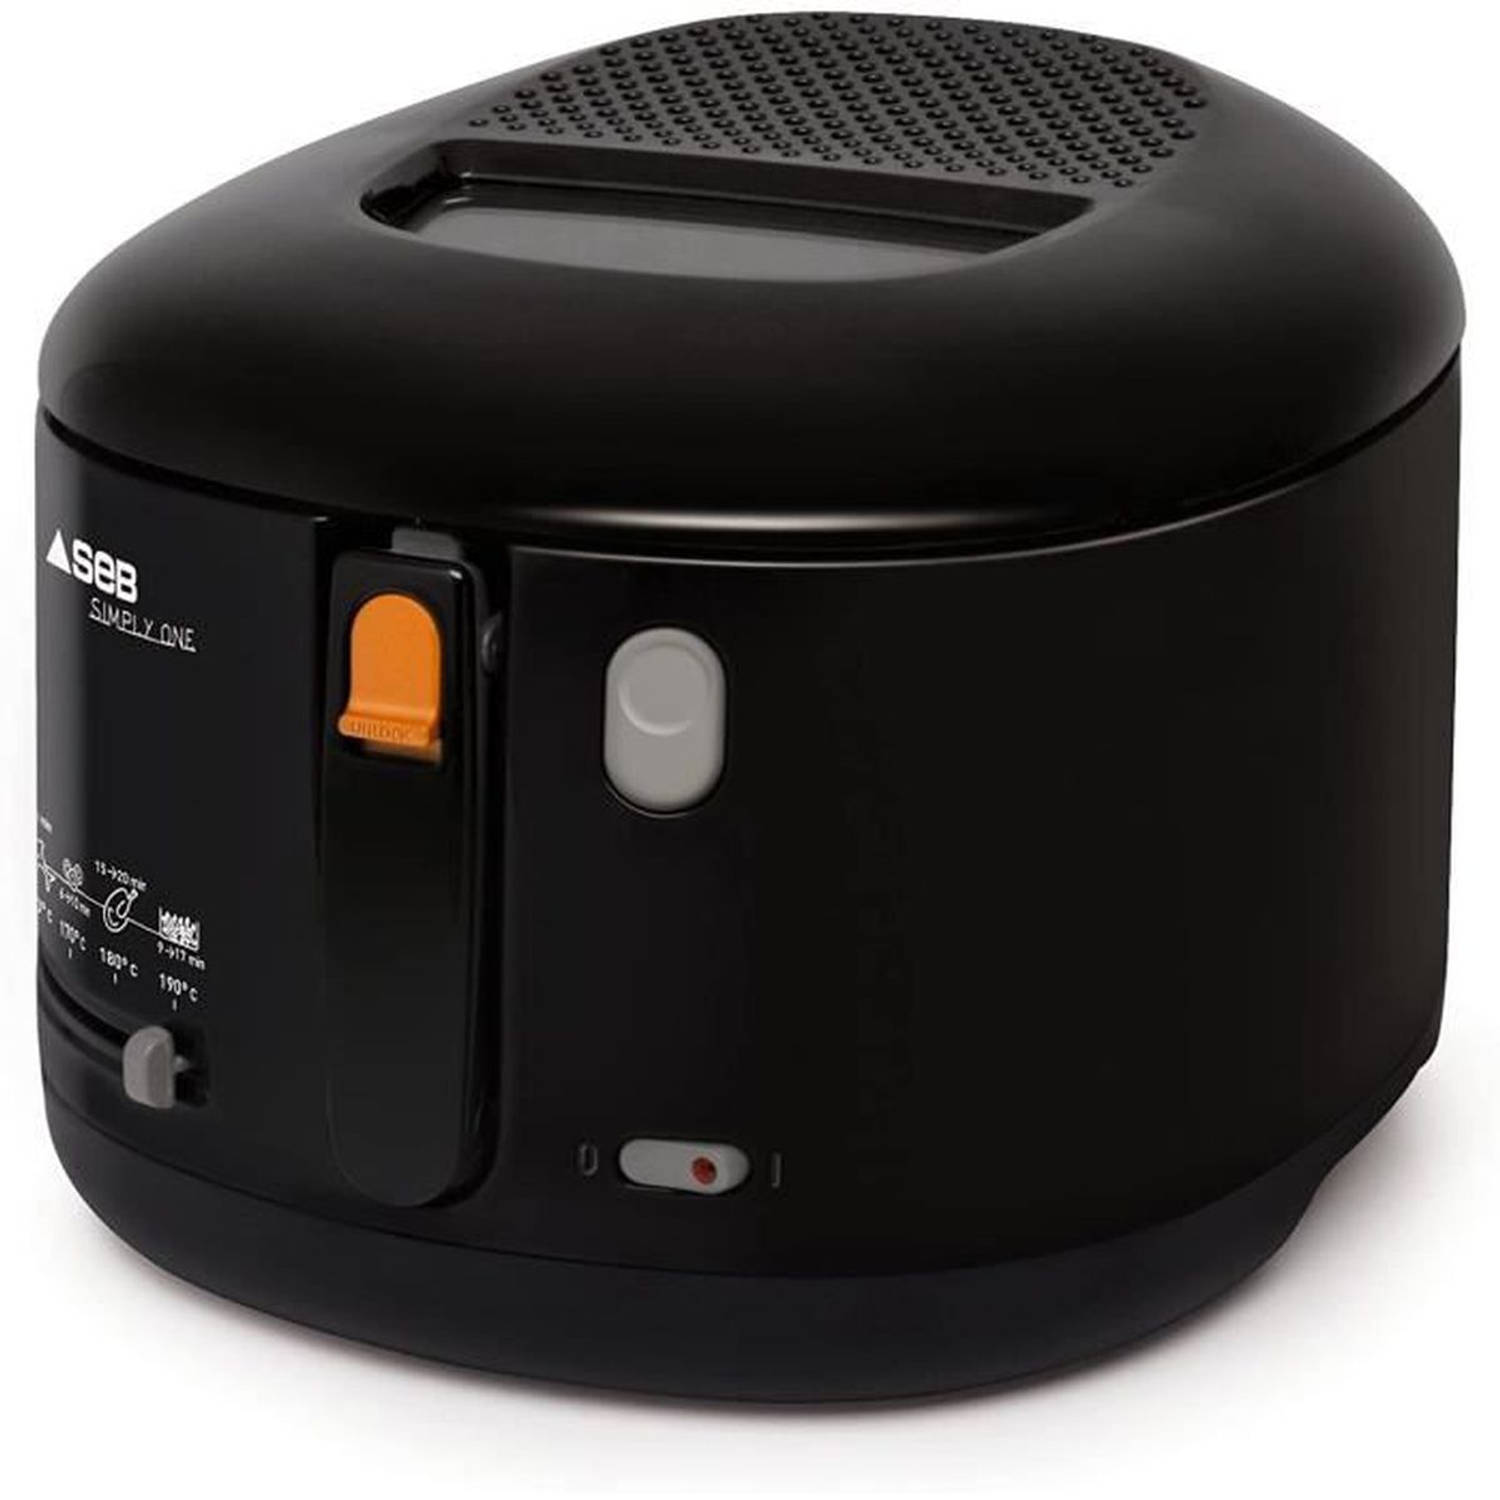 SEB FF160800 Simply One elektrische friteuse - zwart